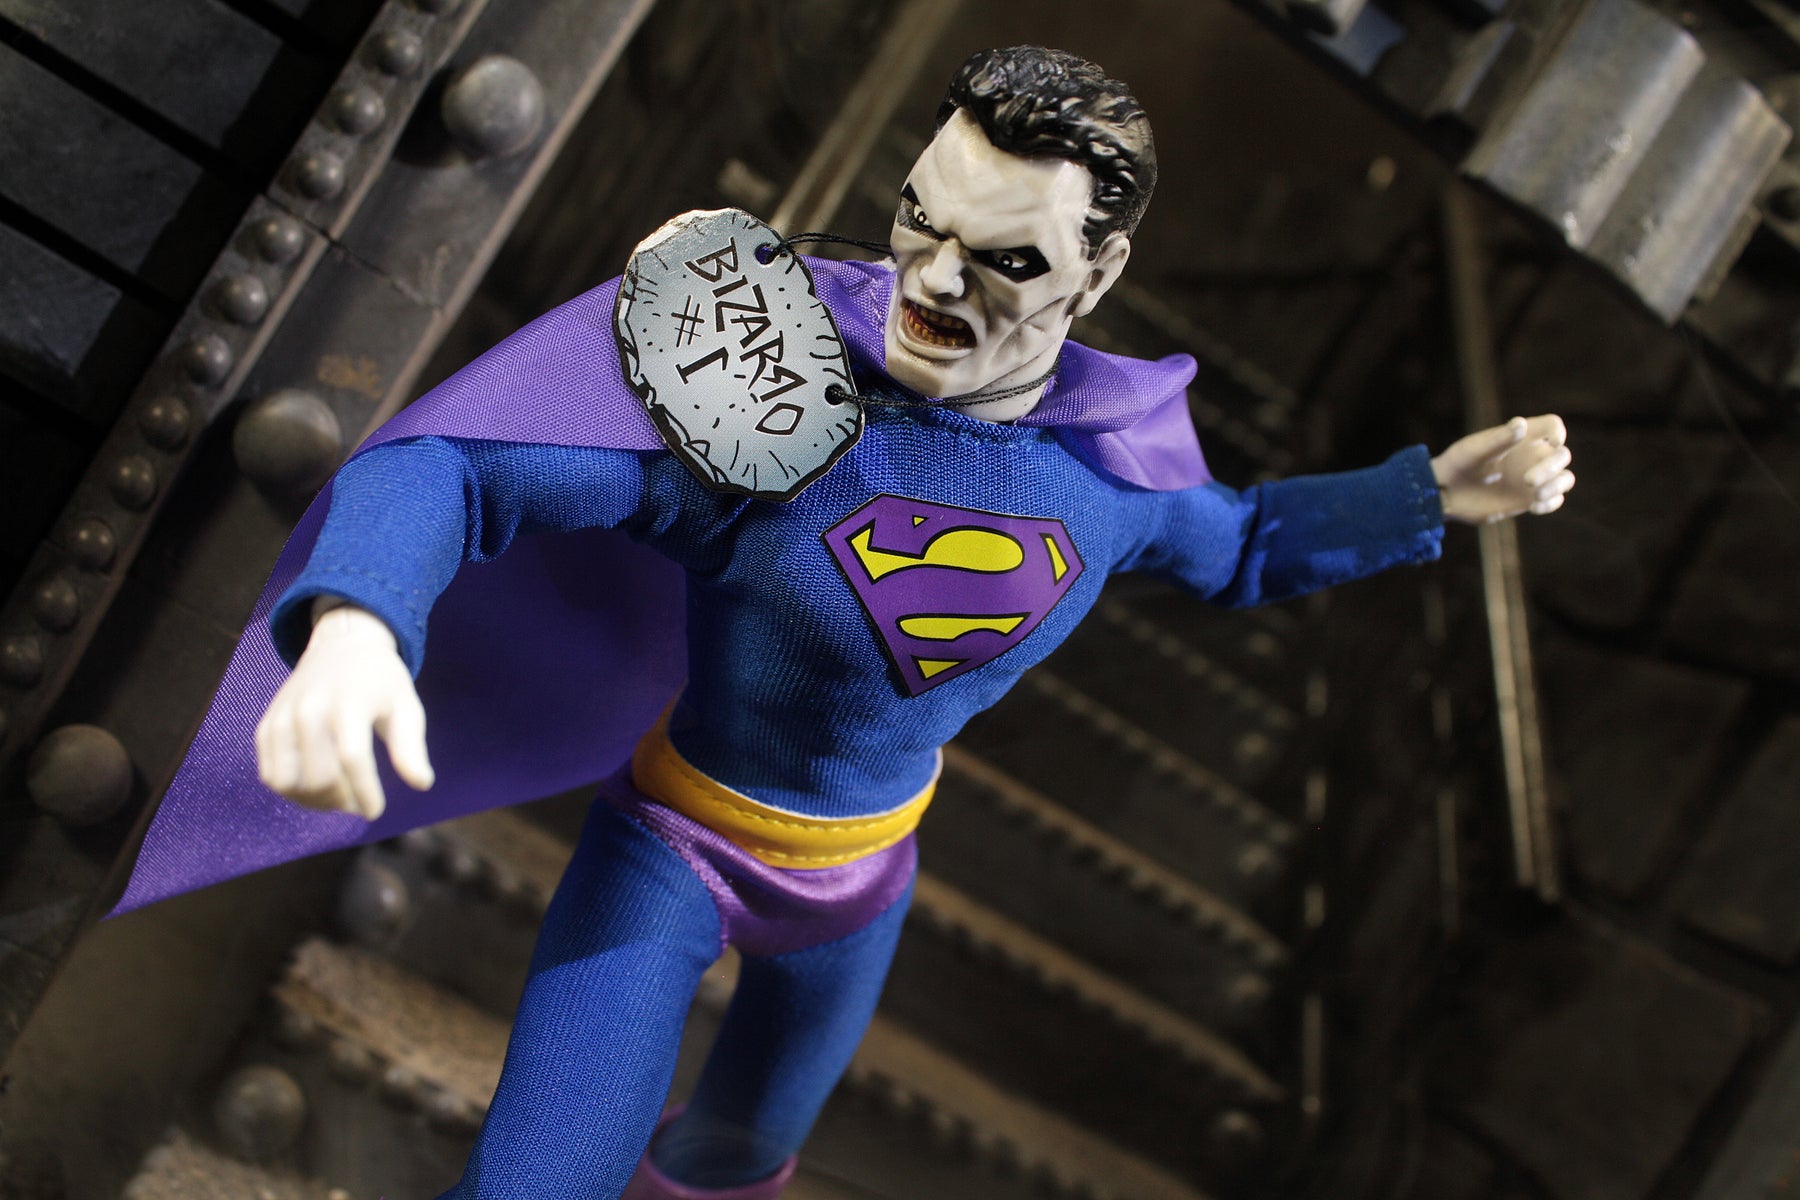 Mego Wave 18 - Bizarro Superman 50th Anniversary World's Greatest Superheroes 8" Action Figure